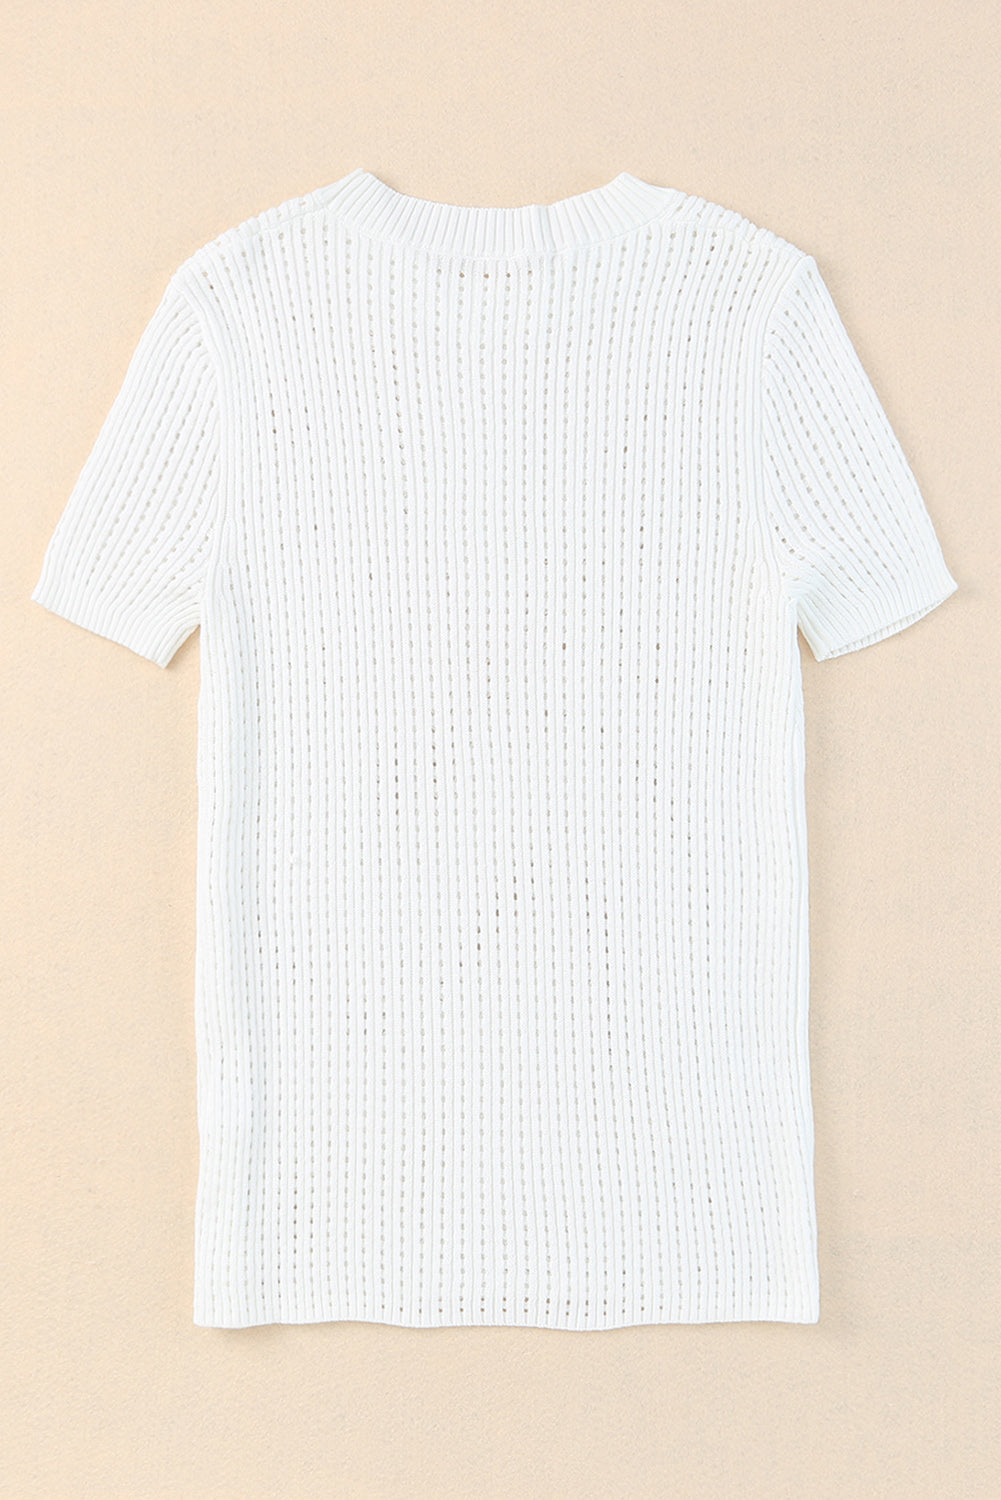 T-shirt bianca a maniche corte lavorata a maglia scavata